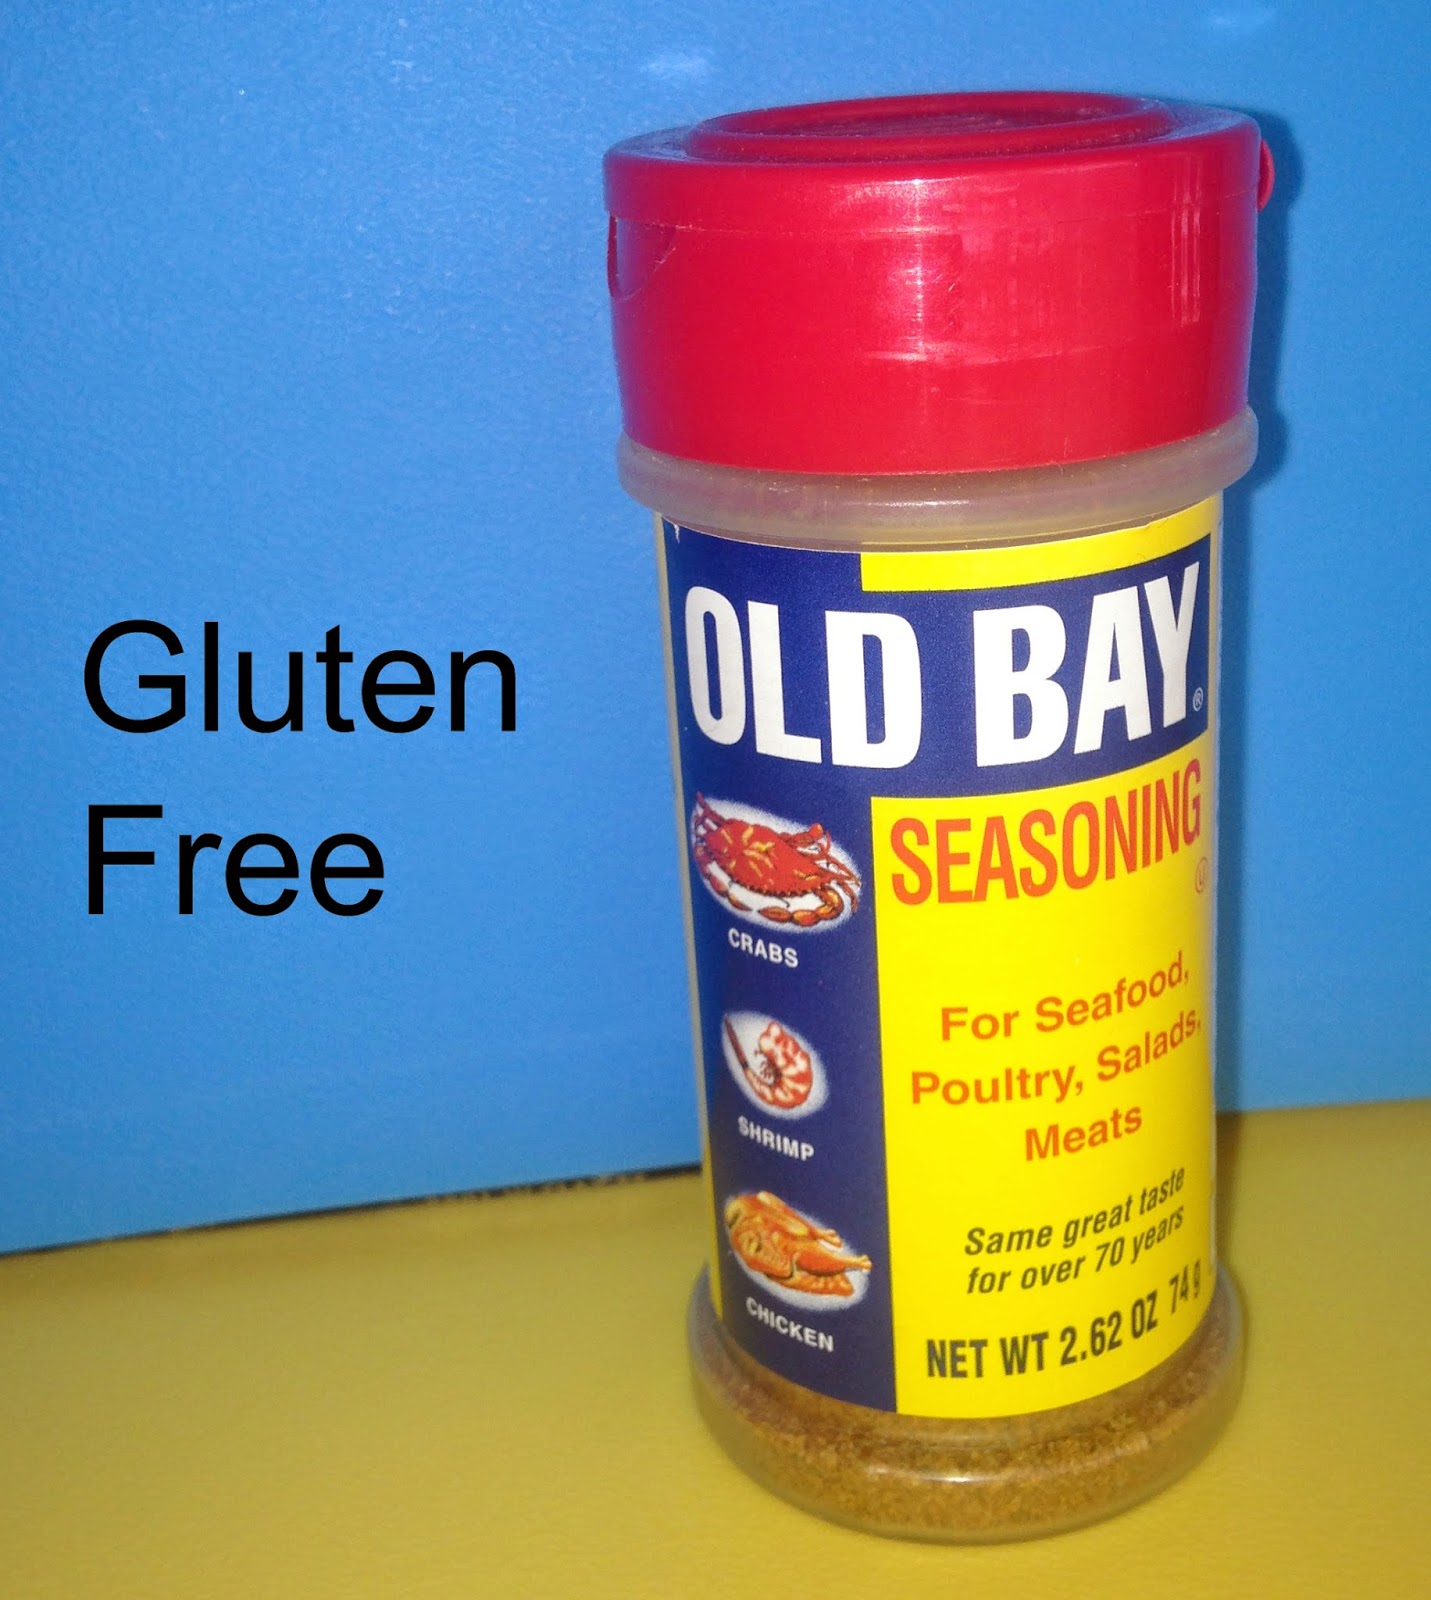 The Sane Kitchen: Old Bay Seasoning is Gluten-Free